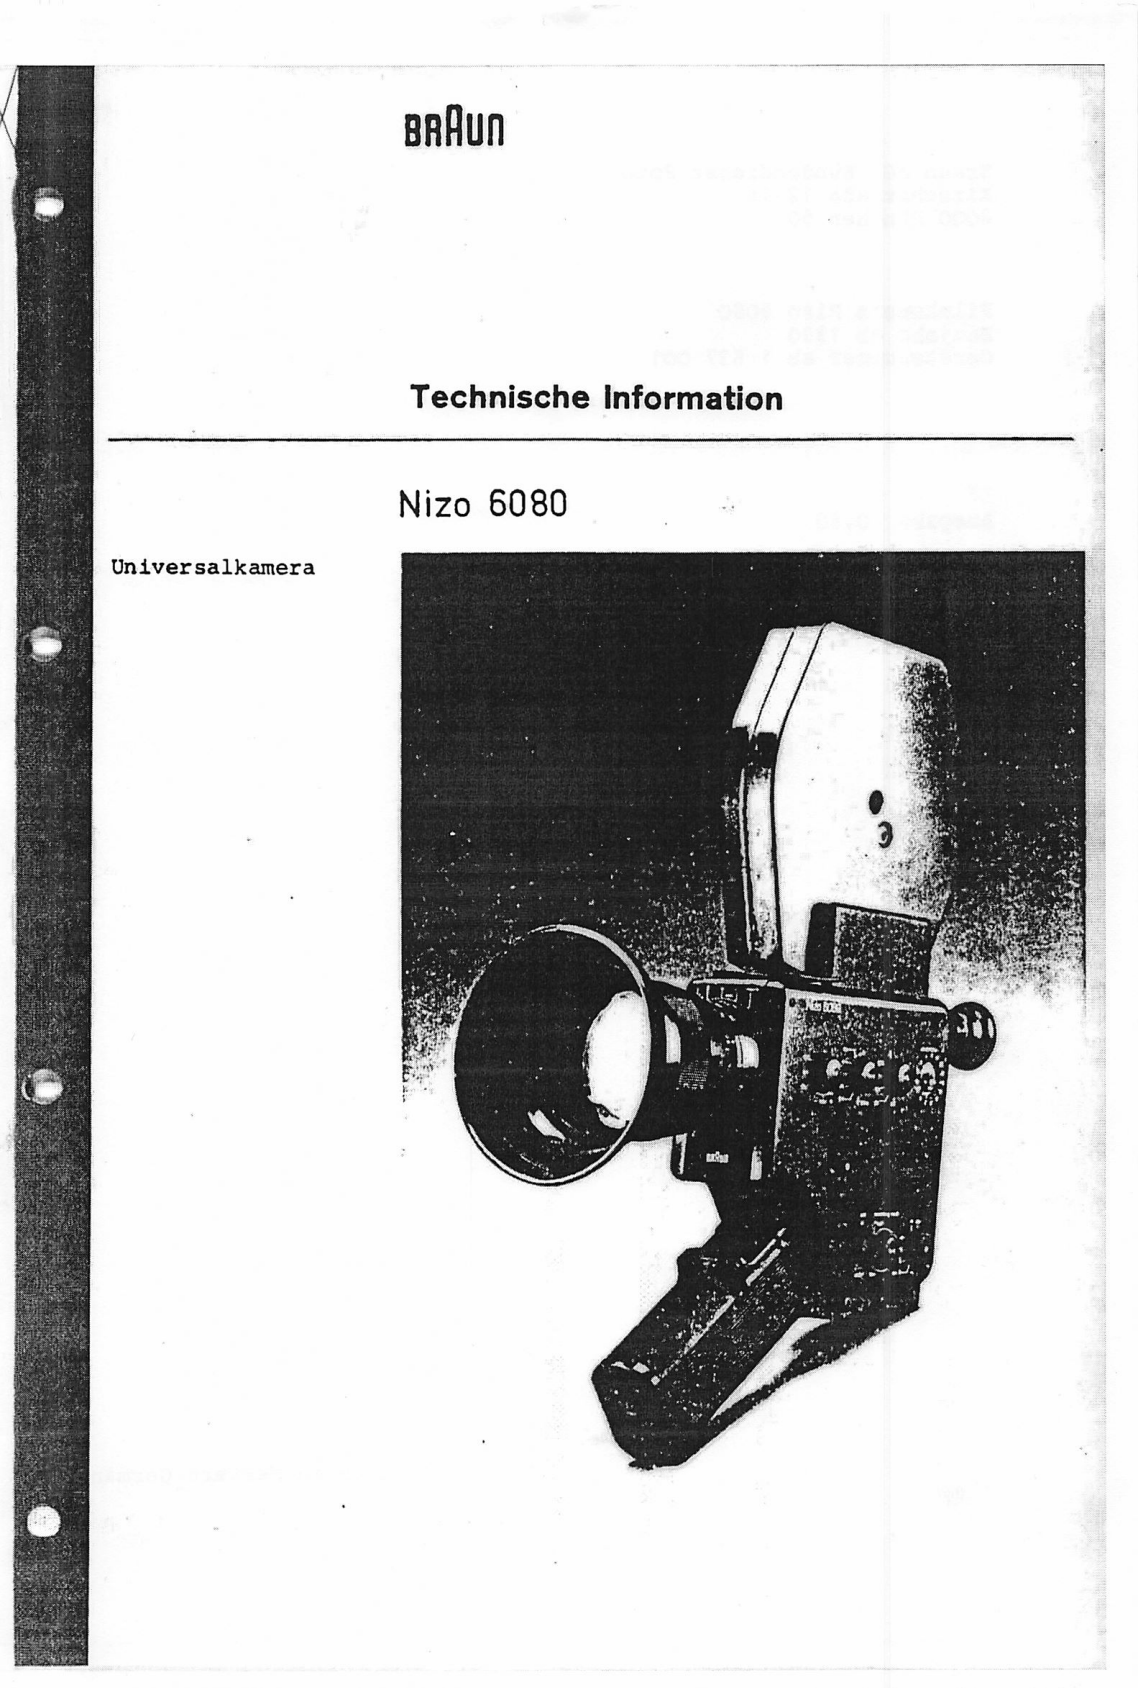 NIZO6080 service manual